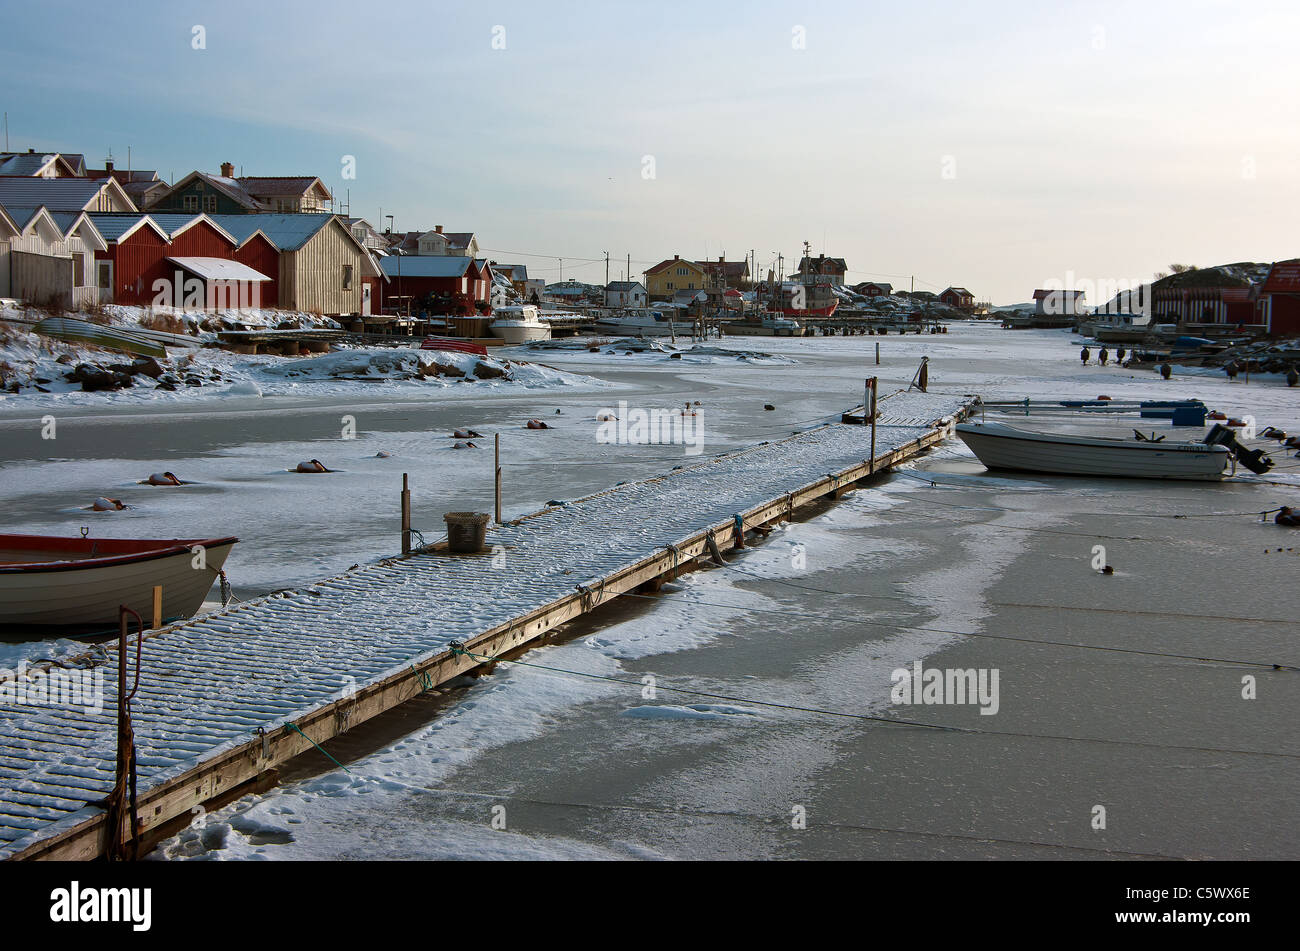 Fotö island in wintertime, Bohuslän. Sweden Stock Photo